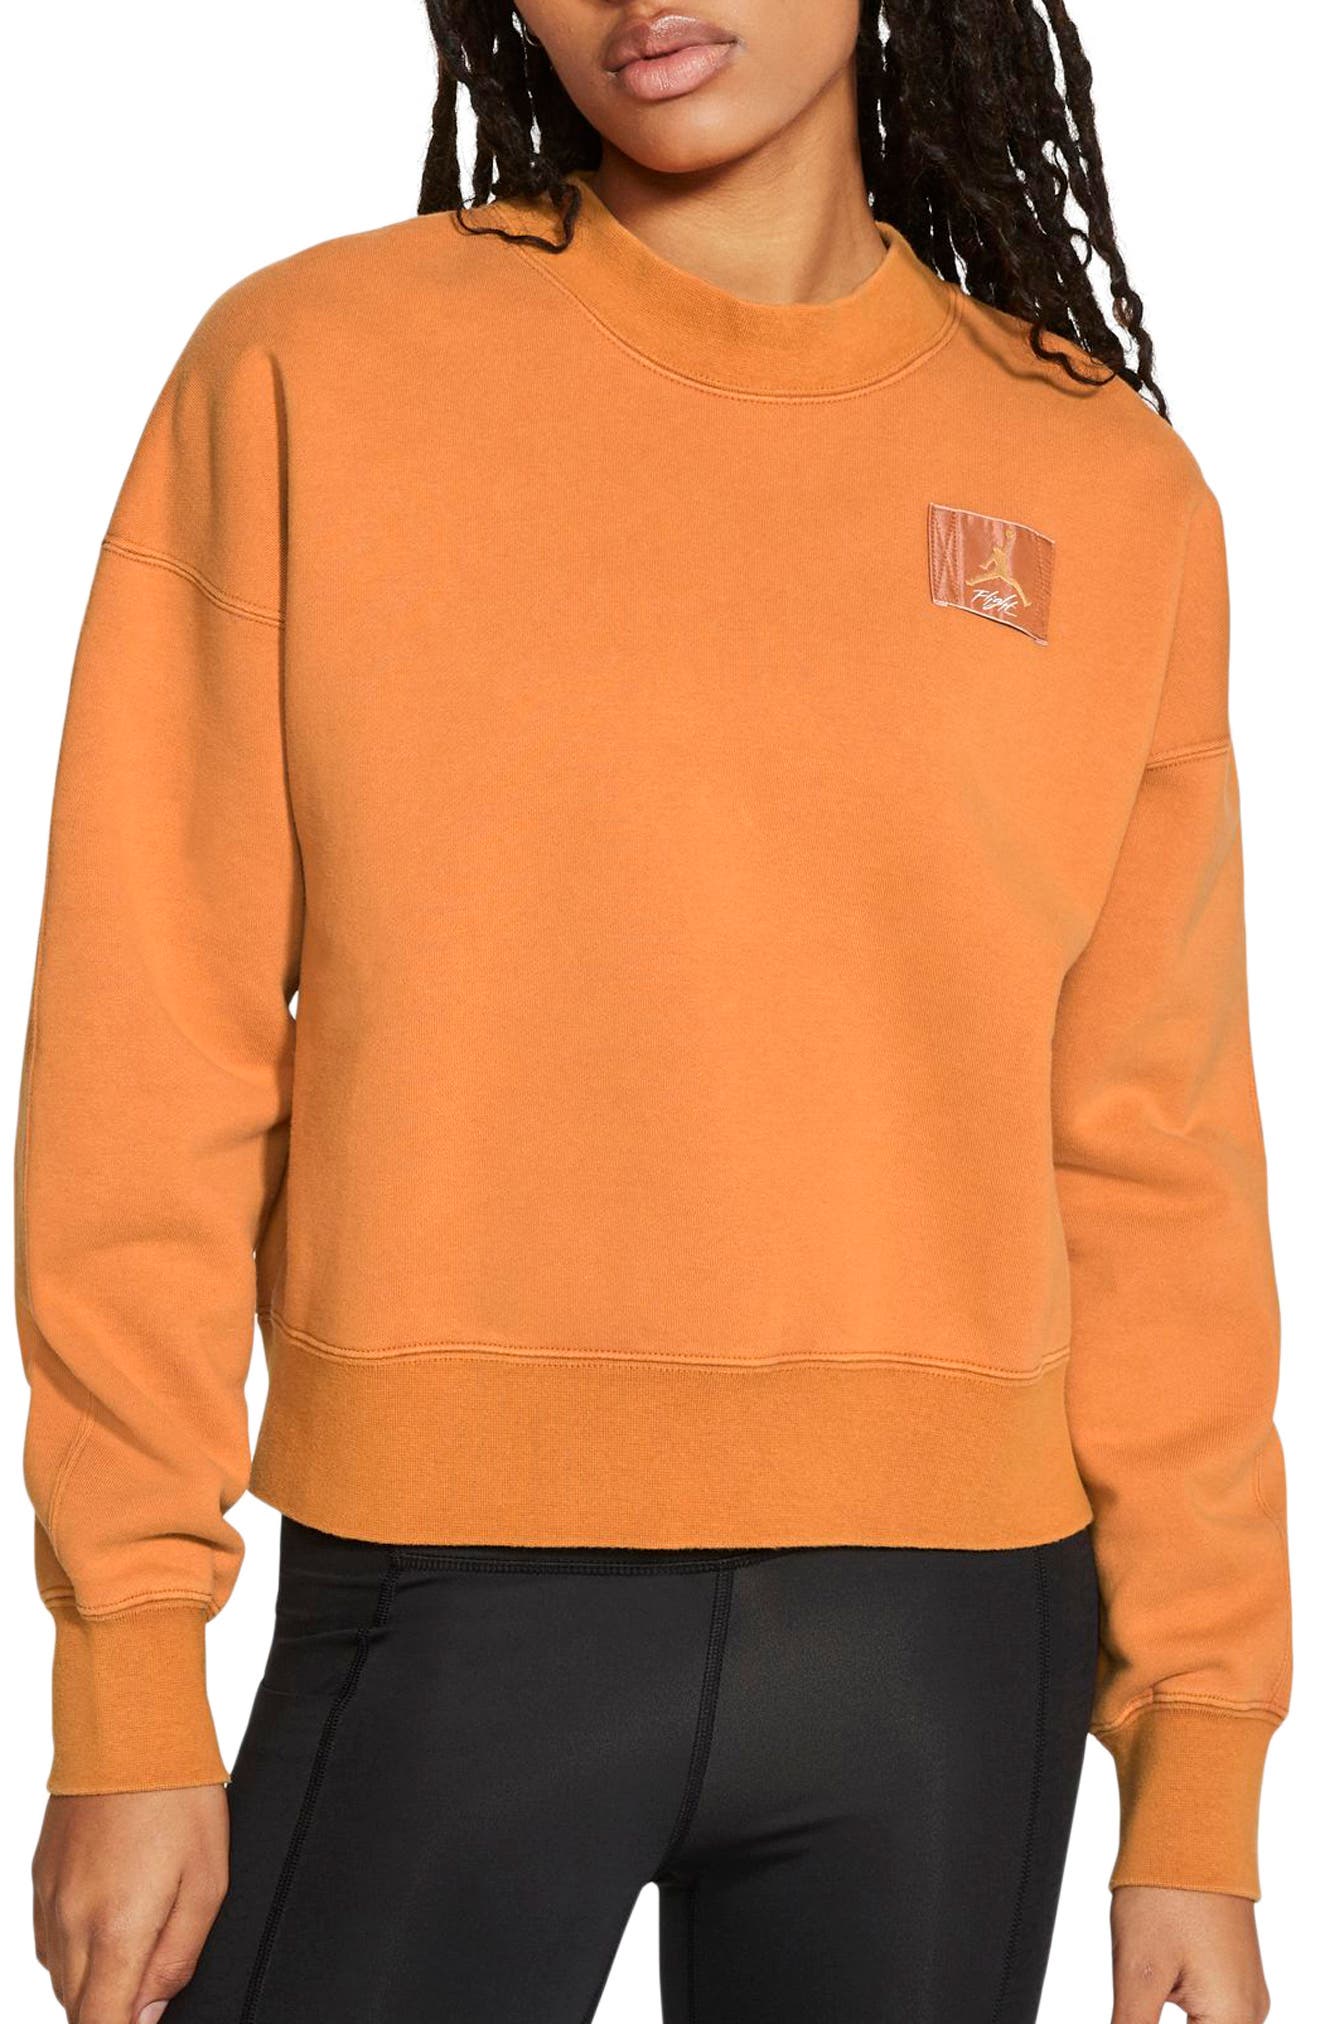 orange nike sweatshirt womens